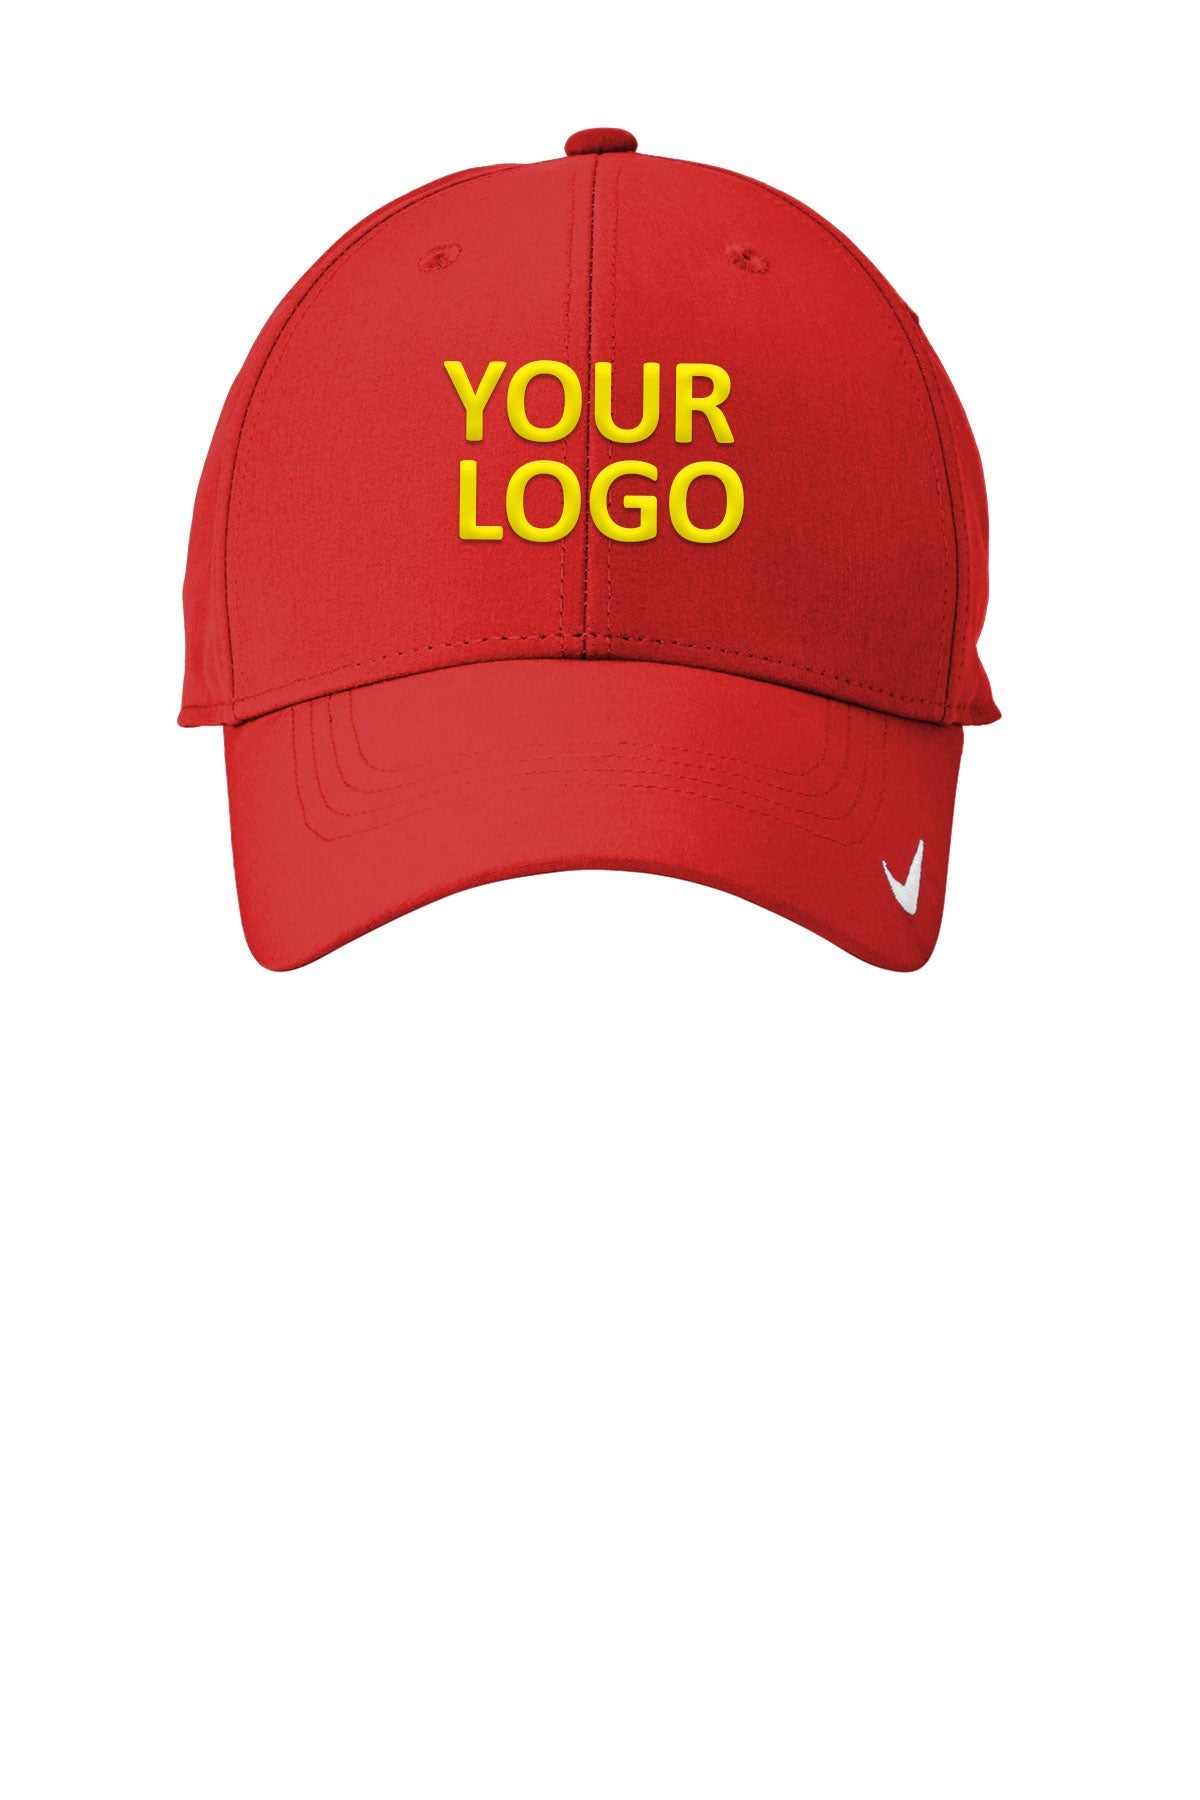 Nike Dri-FIT Legacy Custom Caps, University Red